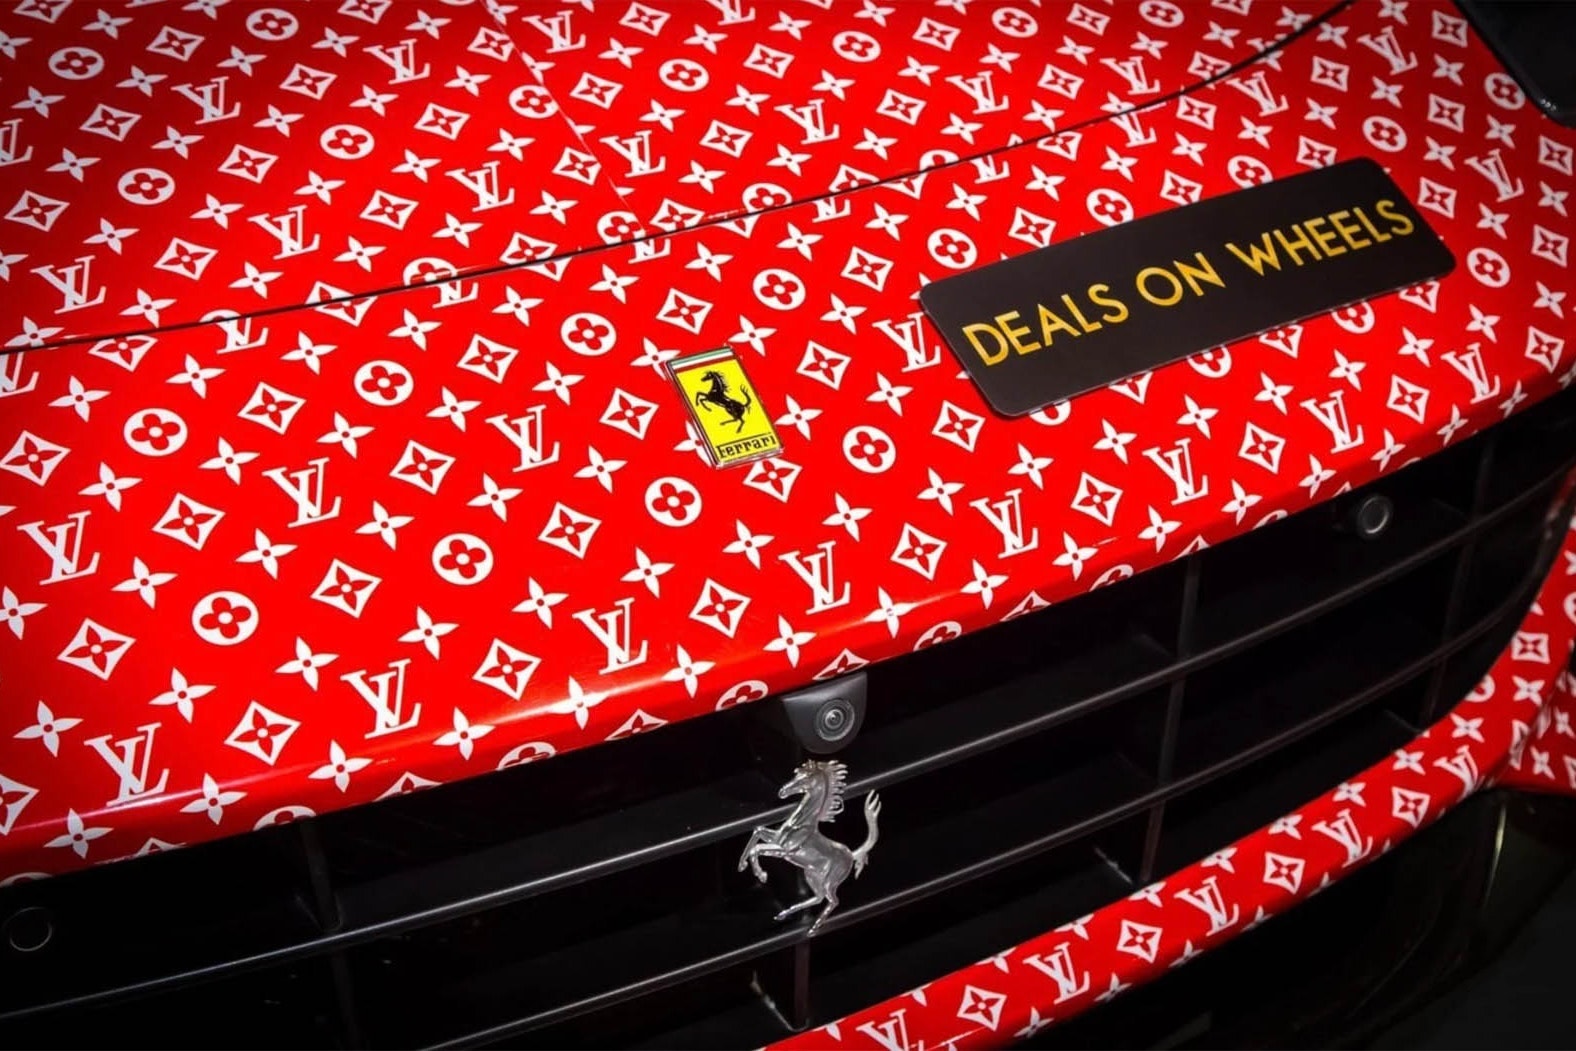 杜拜富童 Money Kicks 出售 Ferrari F12 Berlinetta「Supreme x Louis Vuitton」定製跑車